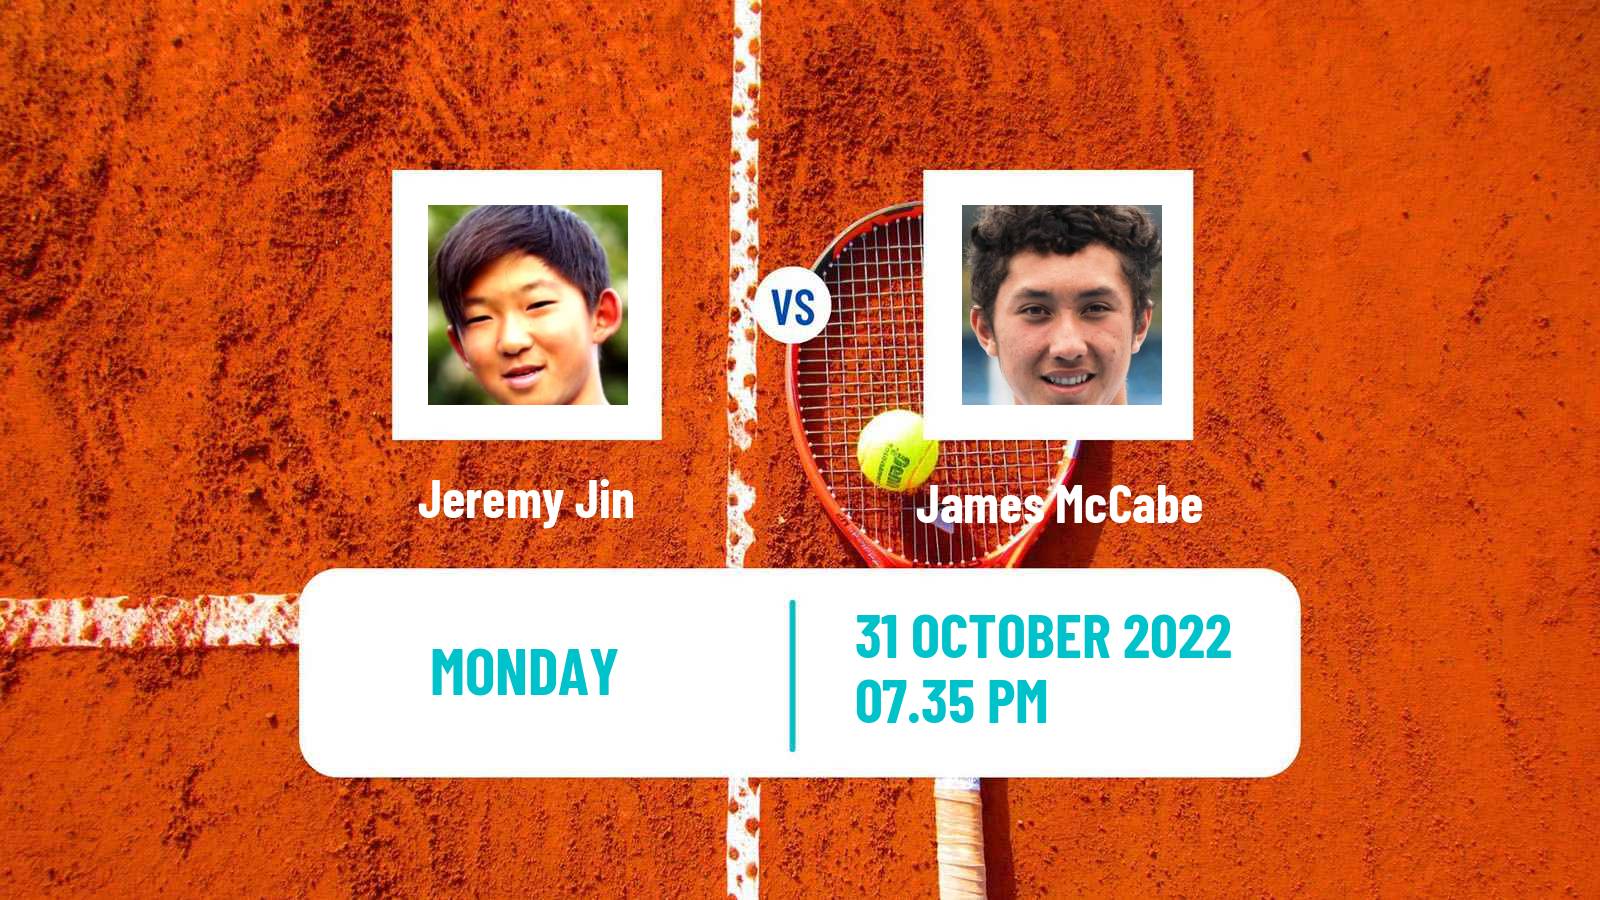 Tennis ATP Challenger Jeremy Jin - James McCabe